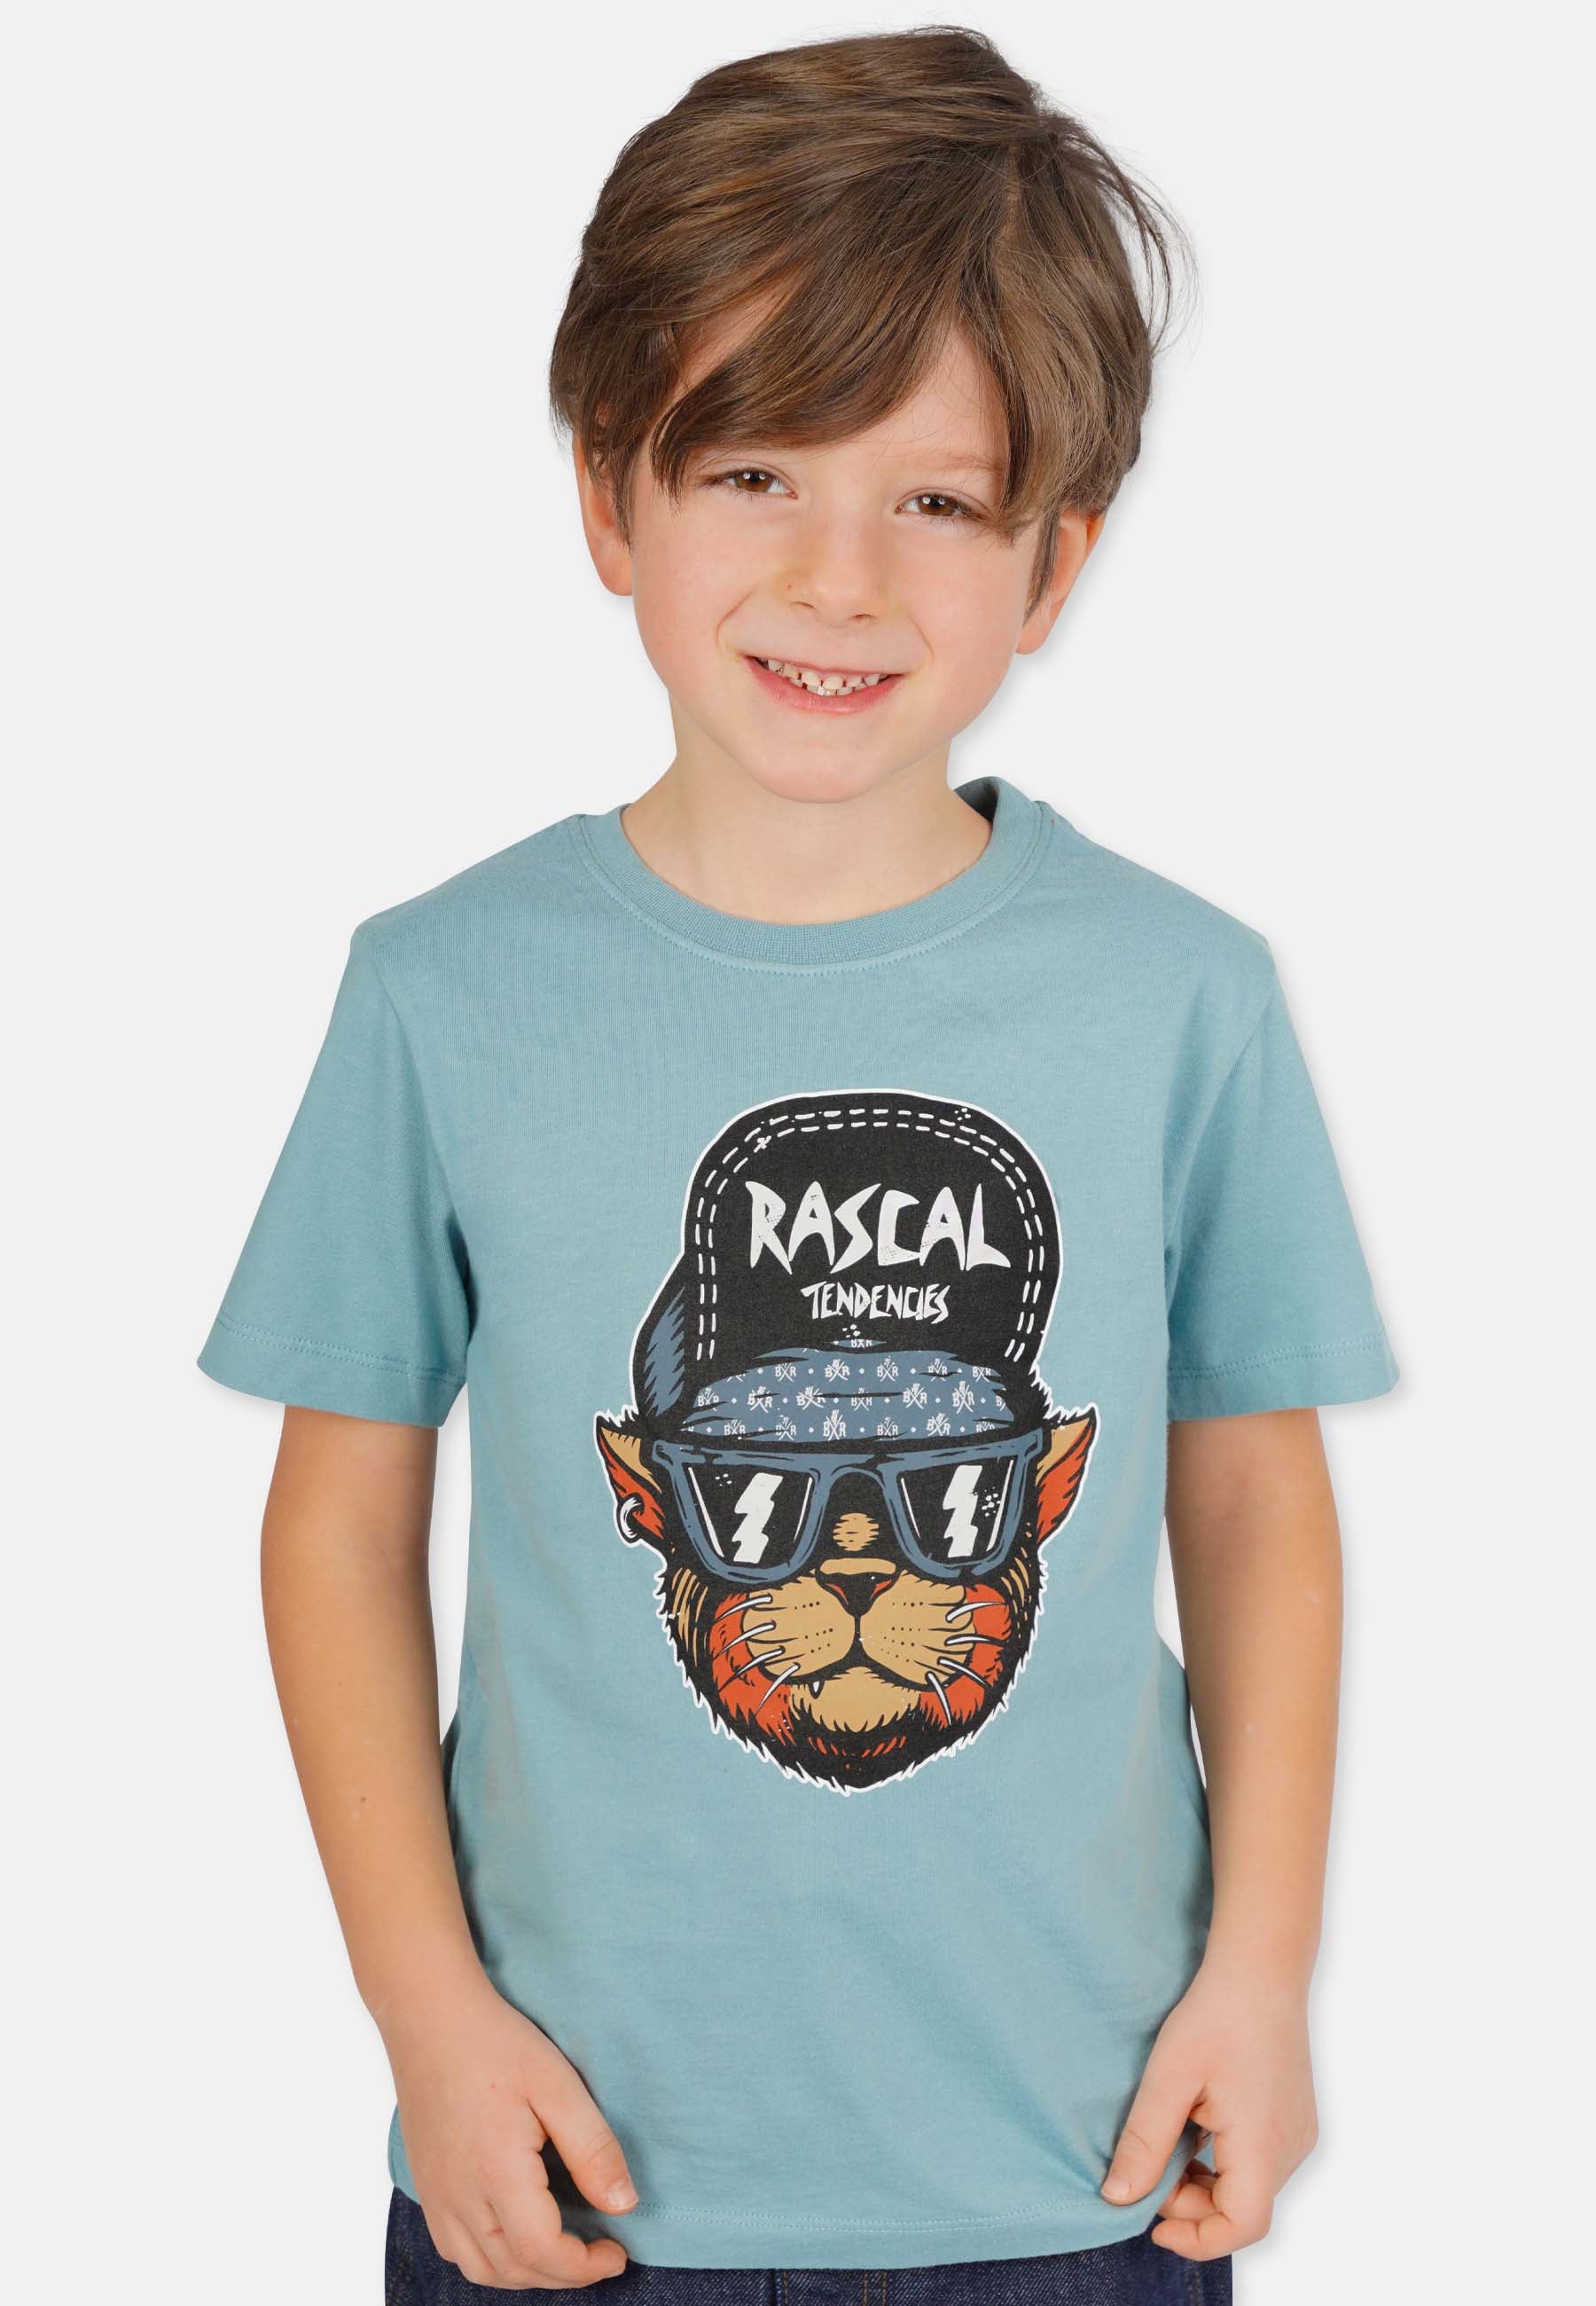 Rascal Tendencies T-Shirt